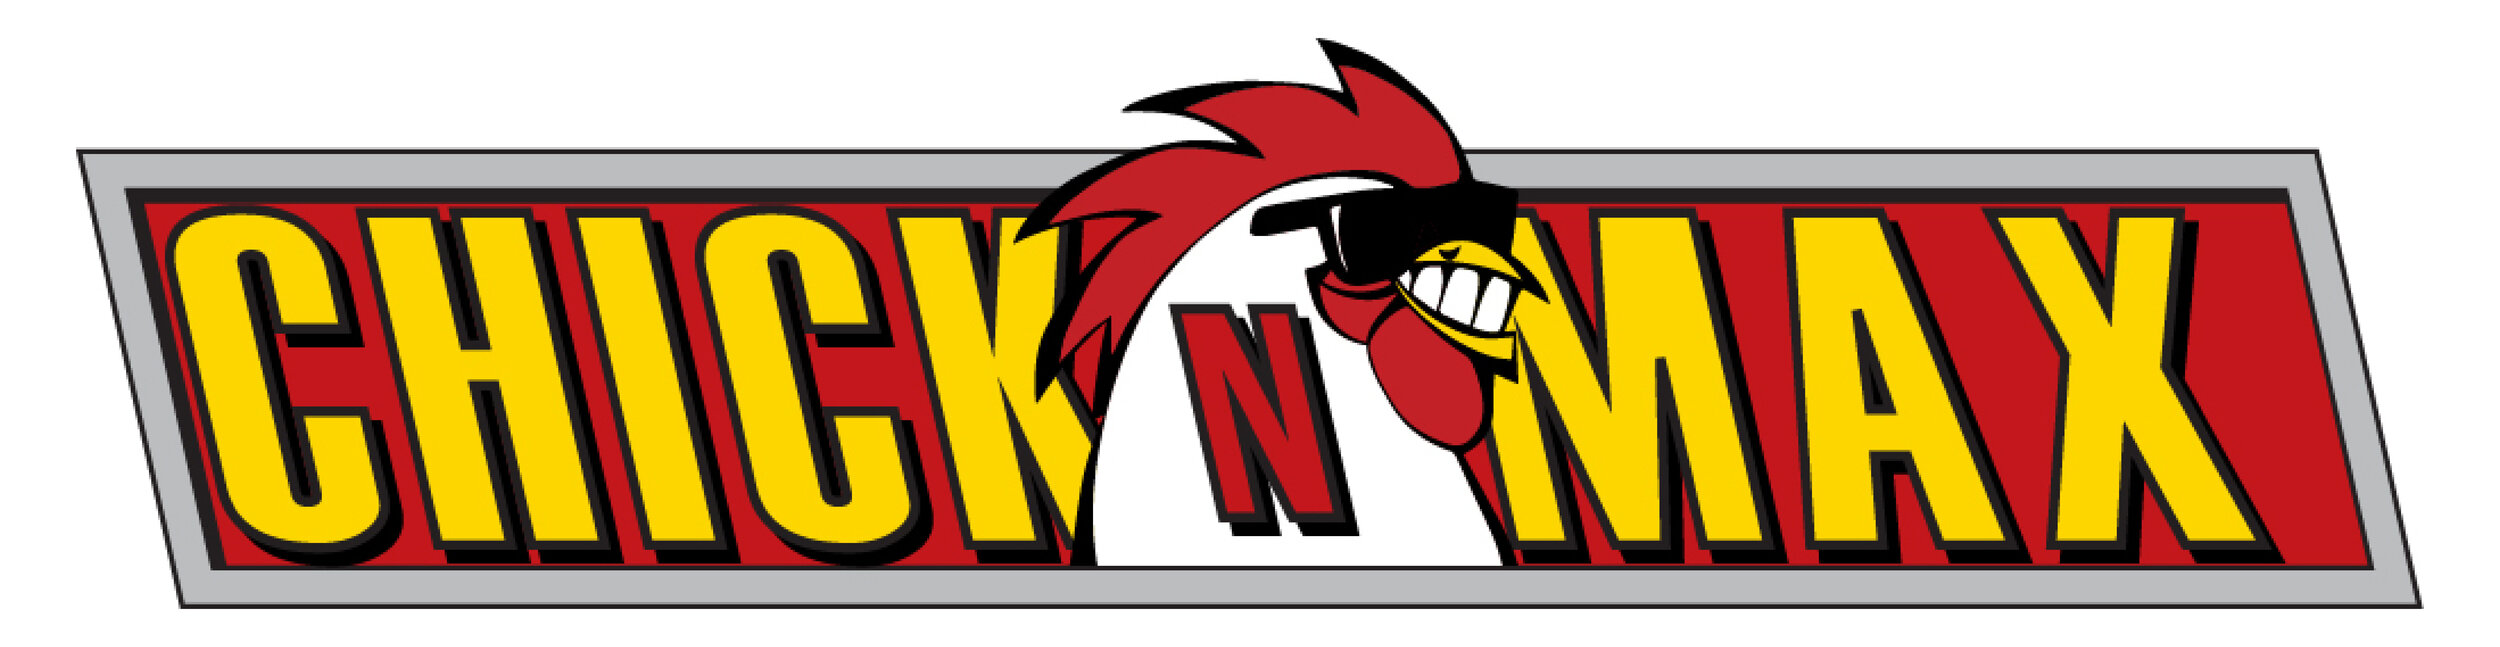 Chick n Max Logo - Web.jpg